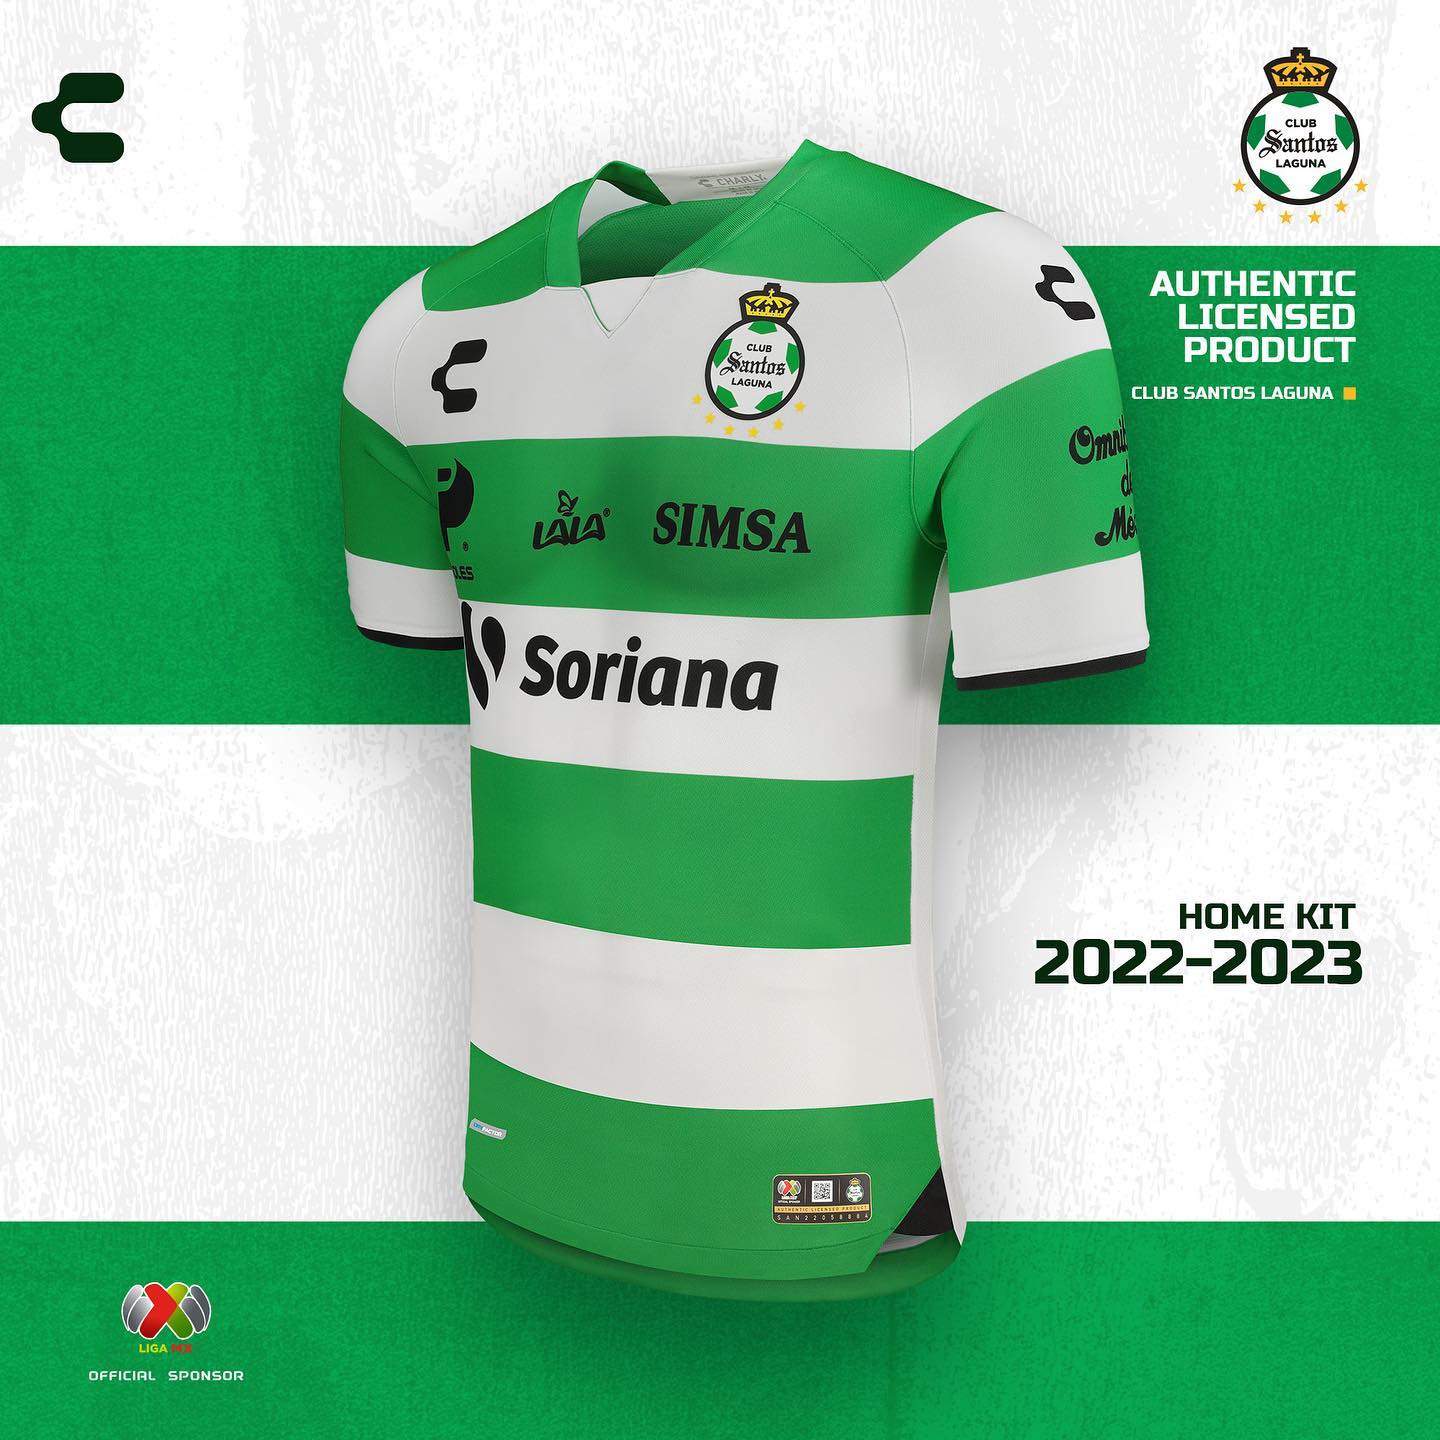 Camisas-do-Santos-Laguna-2022-2023-sao-lancadas-pela-Charly-12.jpg